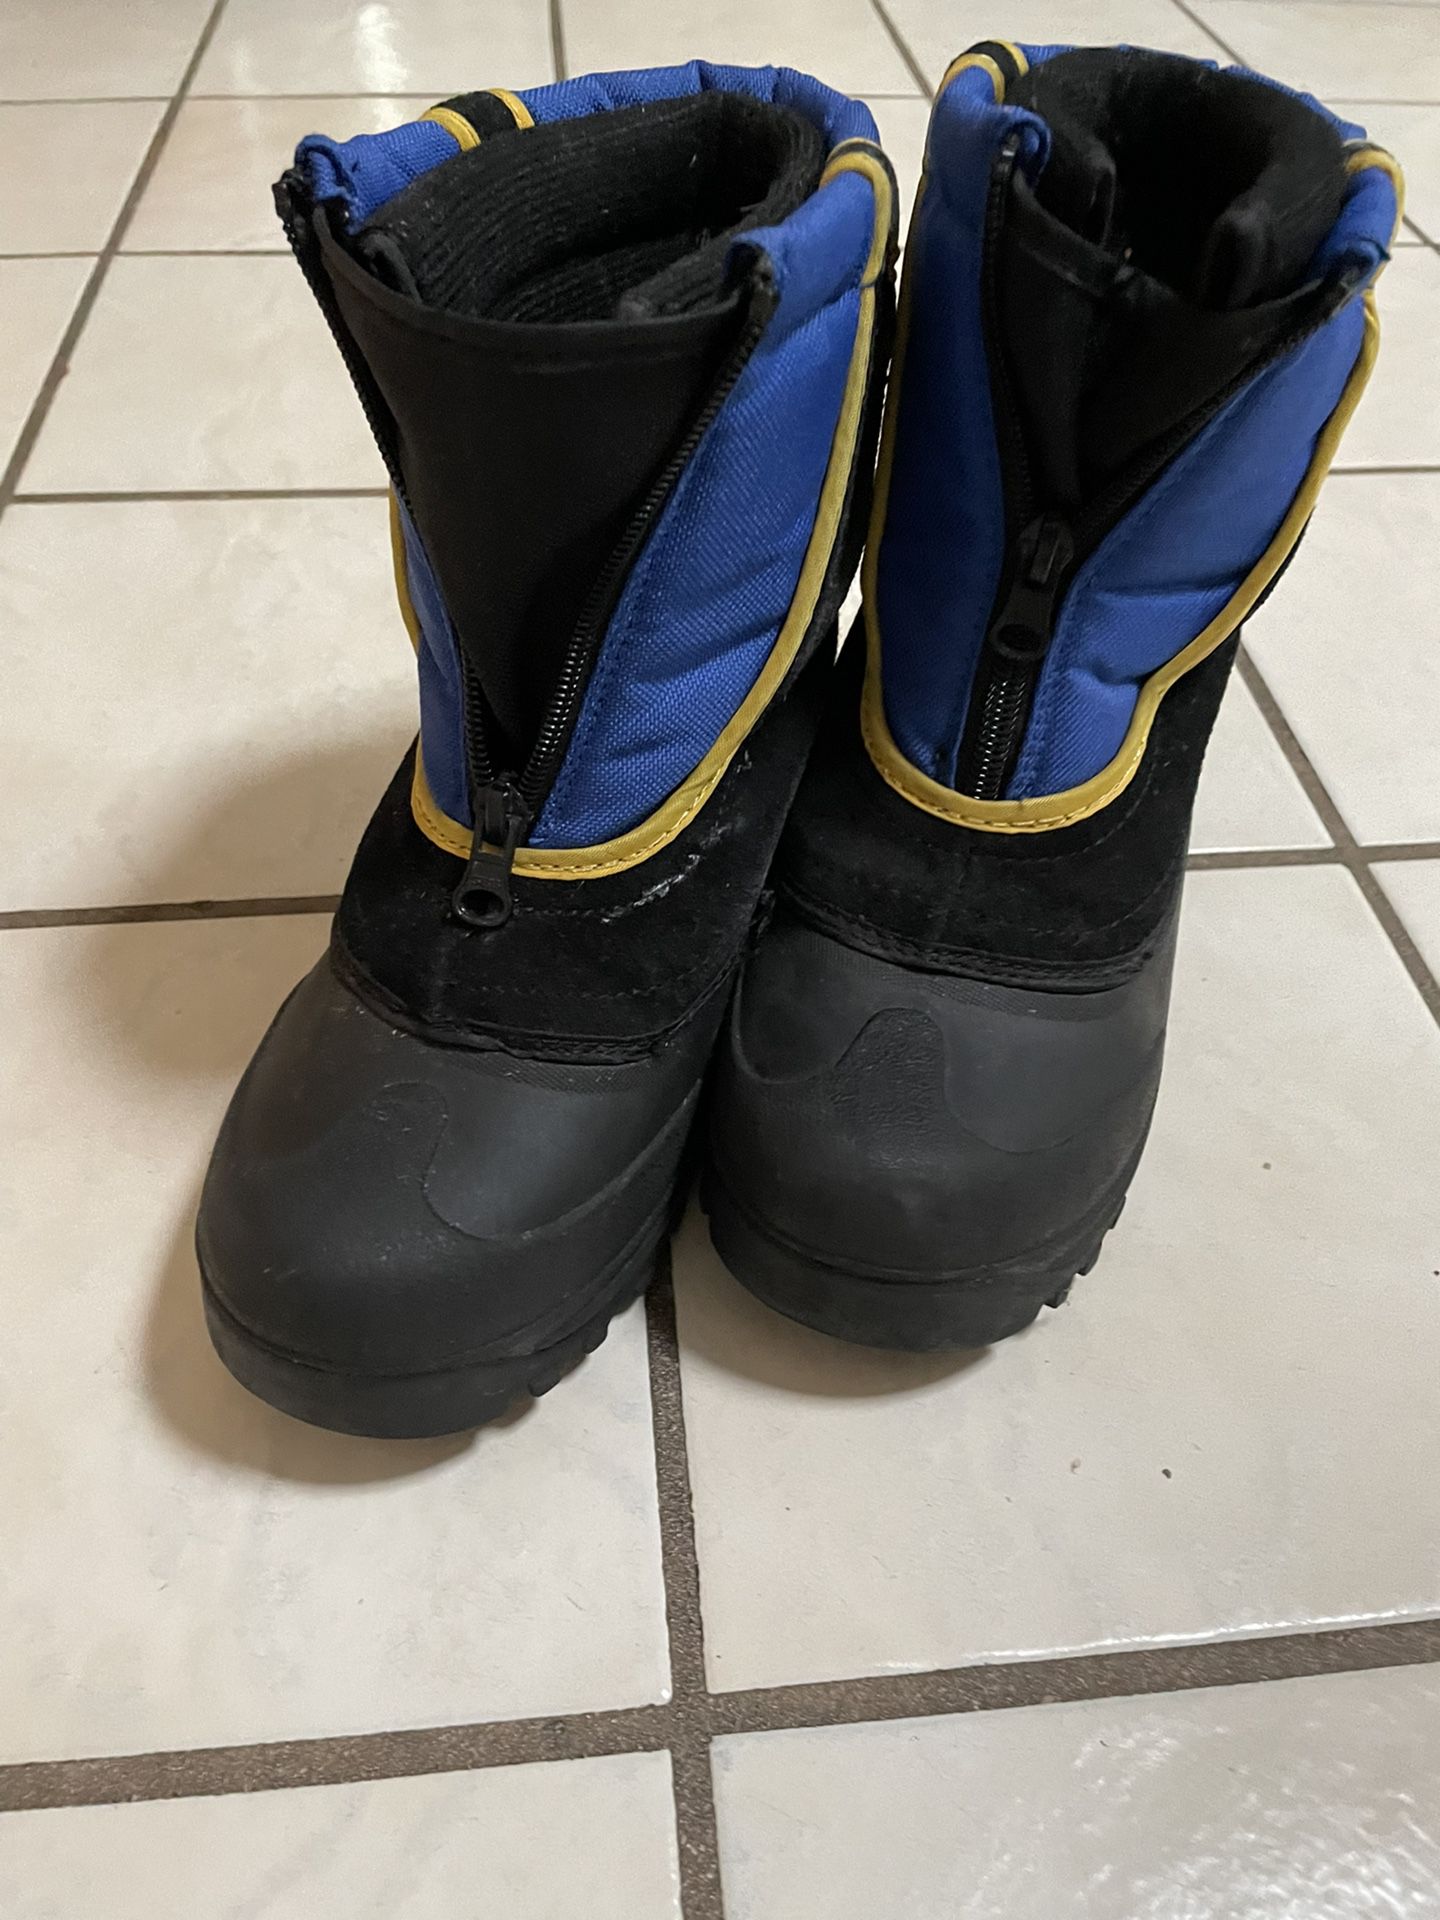 Kids Snow Boots - Size 2